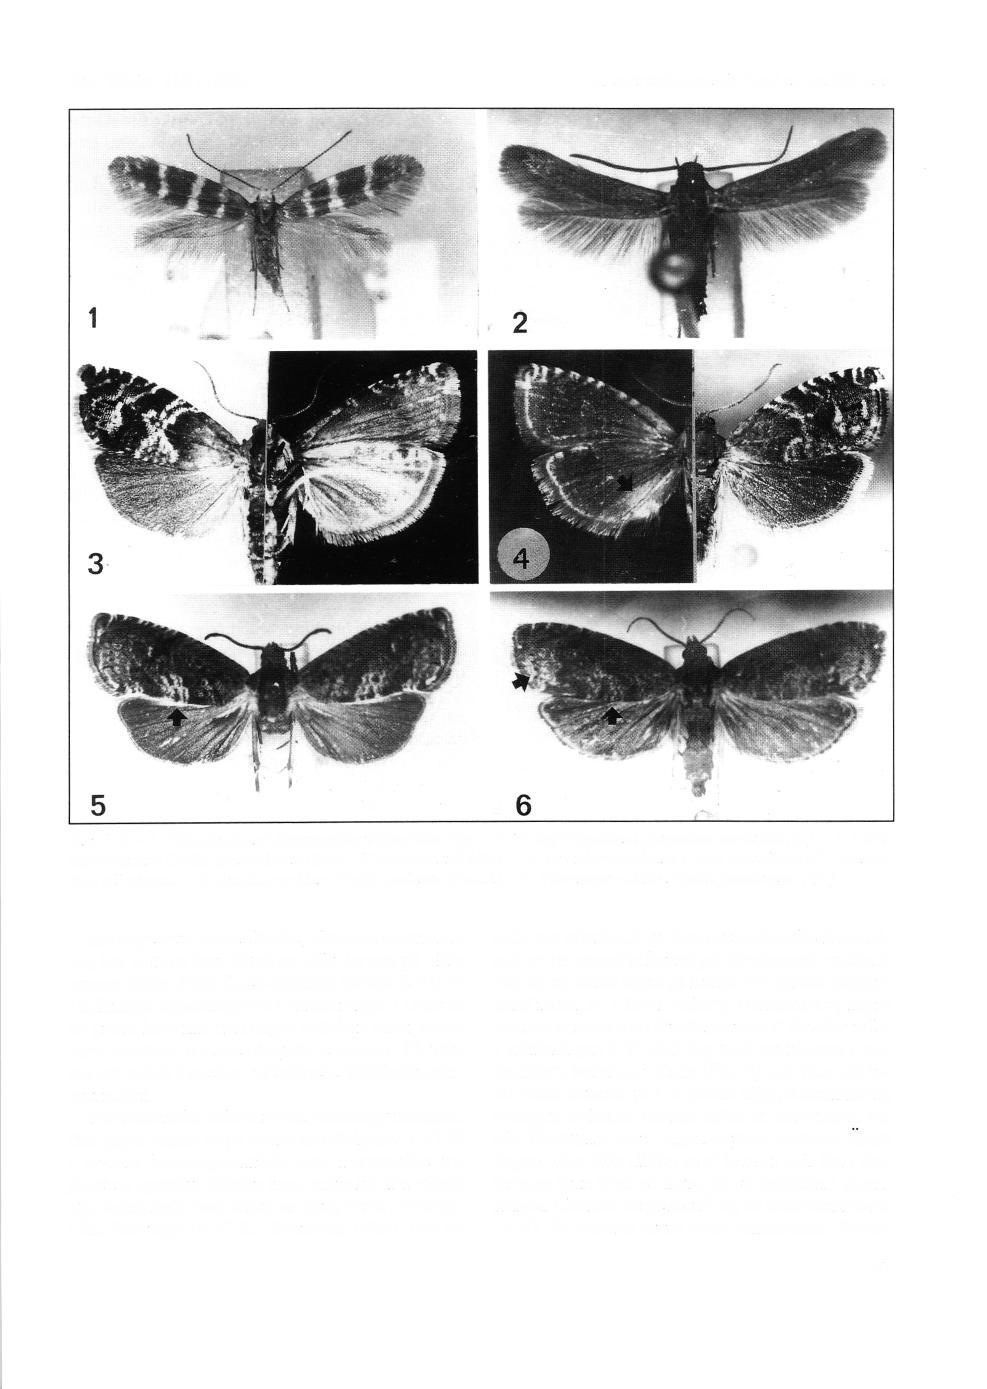 Ent. Tidskr. ll5 (1994) A nmrir kni ngsveirda fy nd av s mdfj cir i lar Fig. I -6. - 1. Trtidgdrdsmal Argyresthia tifasciata Stgr. - 2. Trampdrtgallmal Augasma aeratella (2.). - 3.